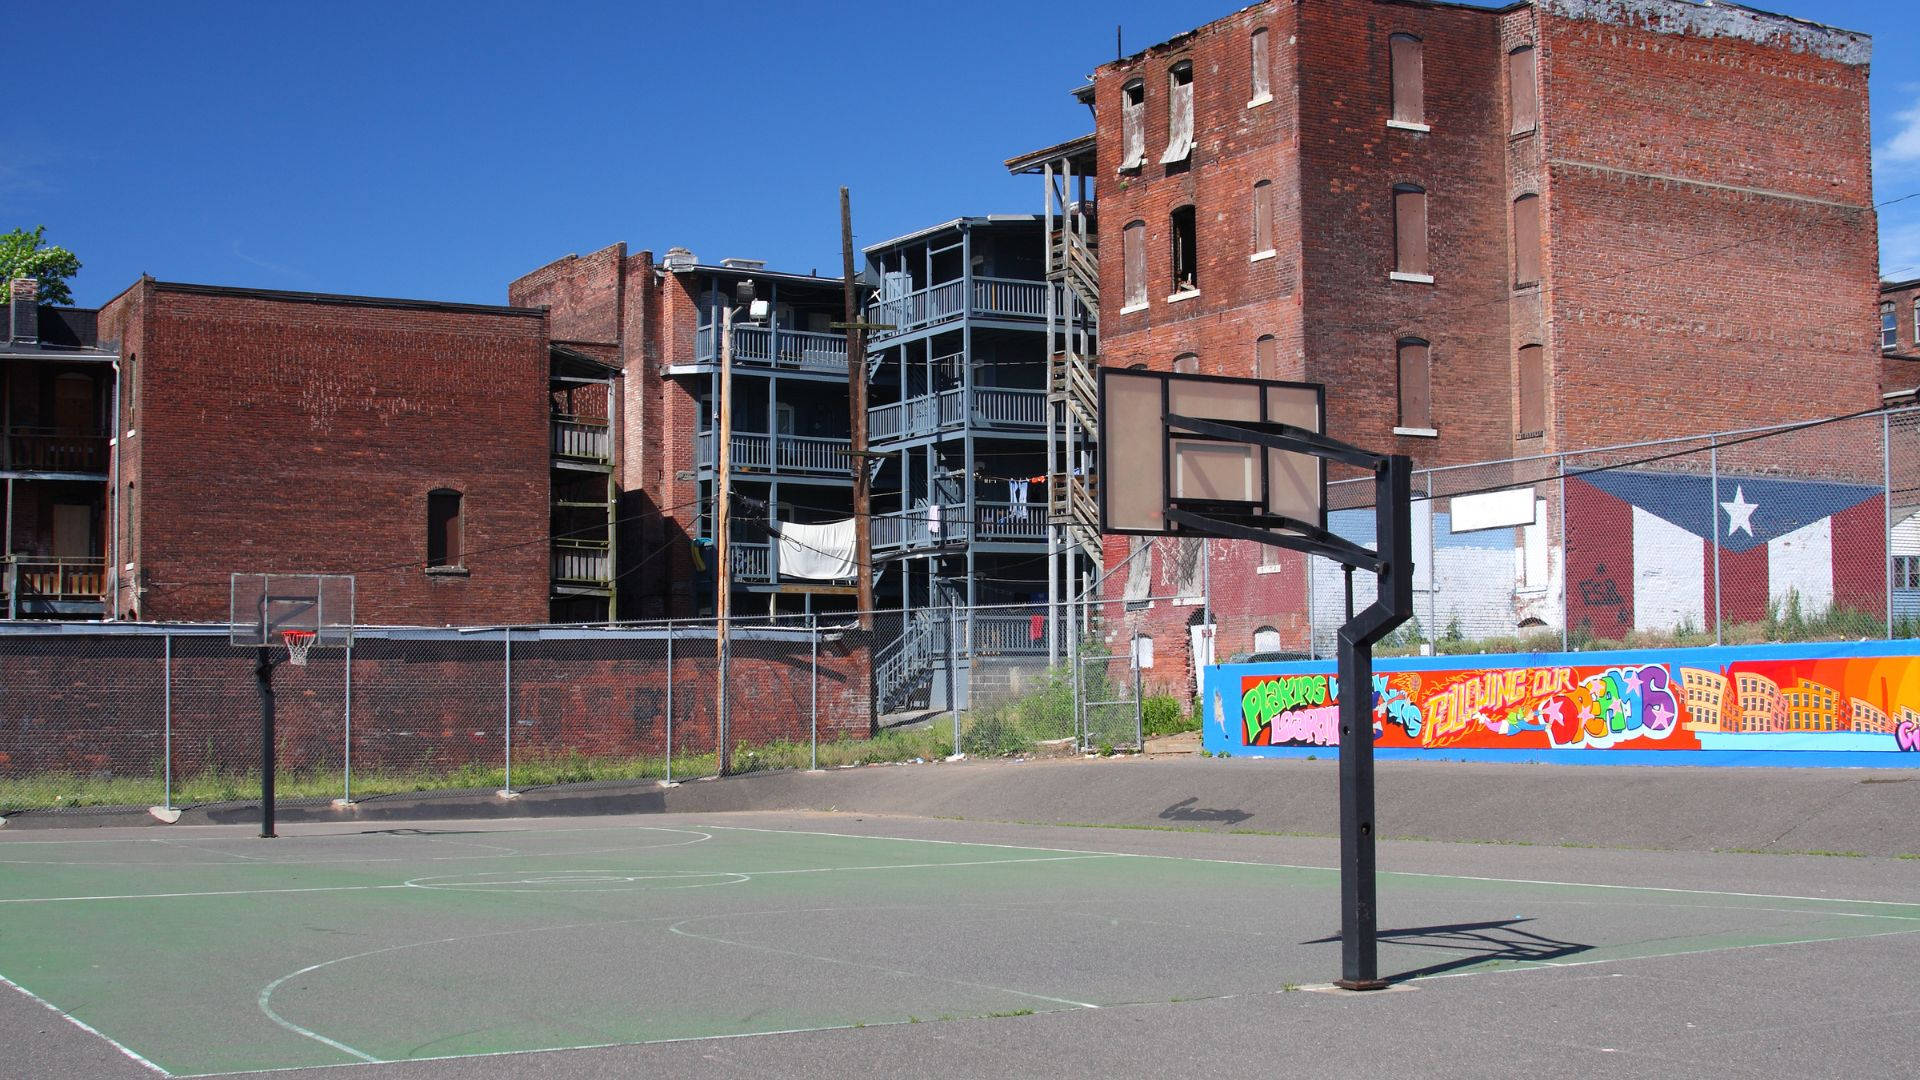 Downtown Basketball Court With Graffiti Wallpaper